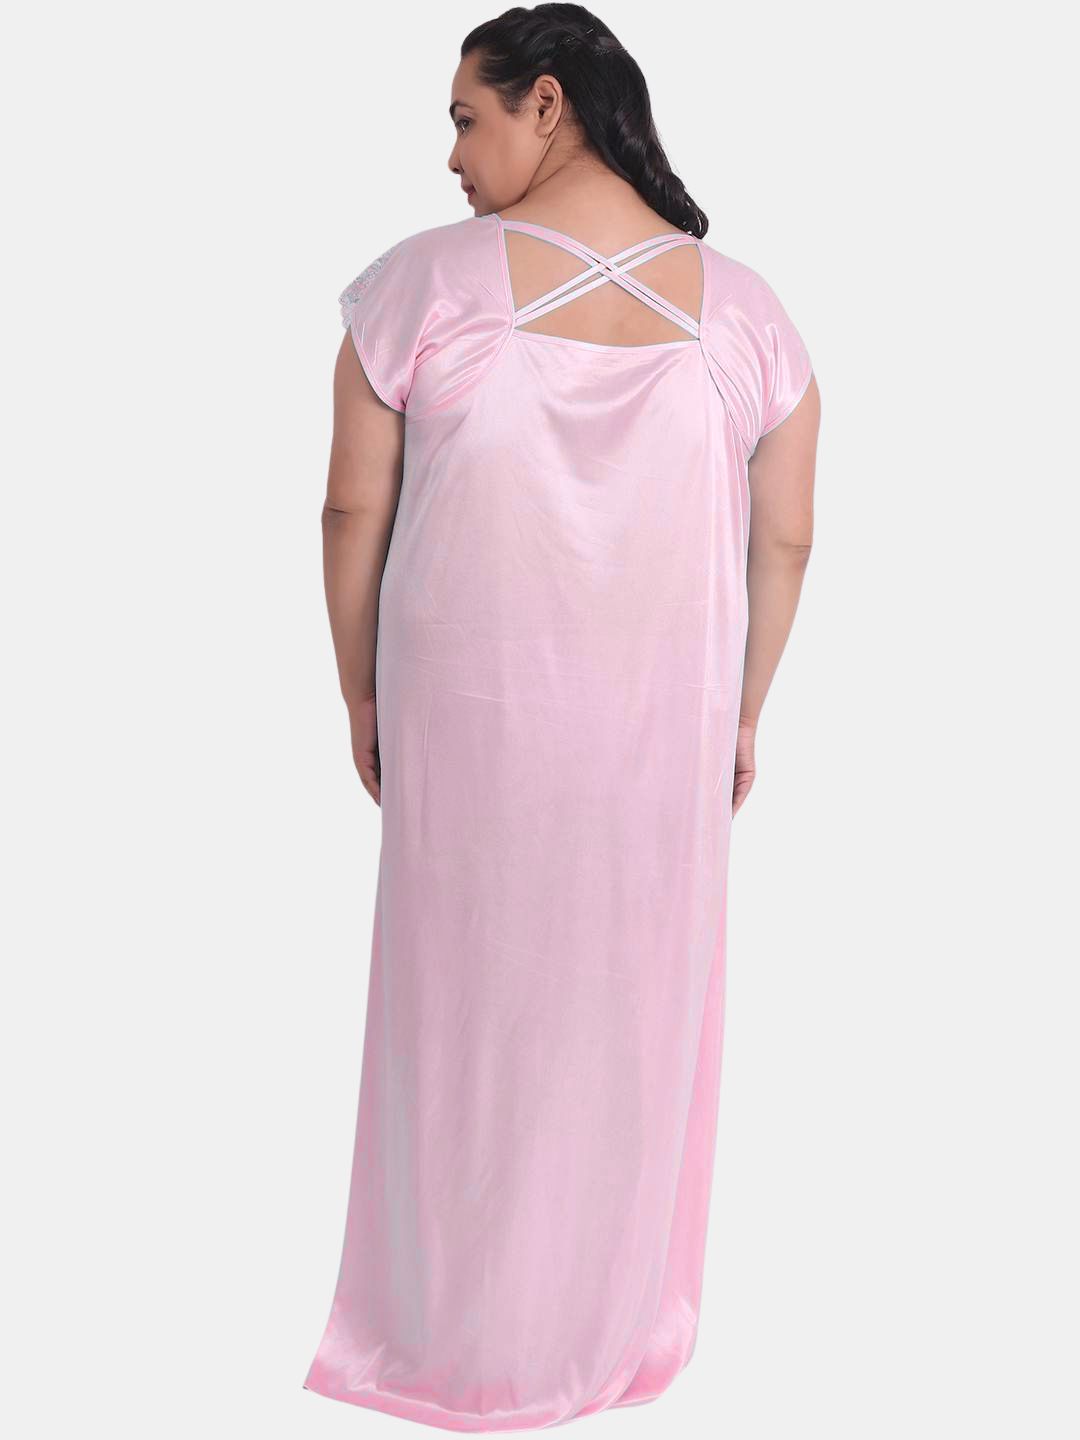 plus size maxi dress for women online-x10rB